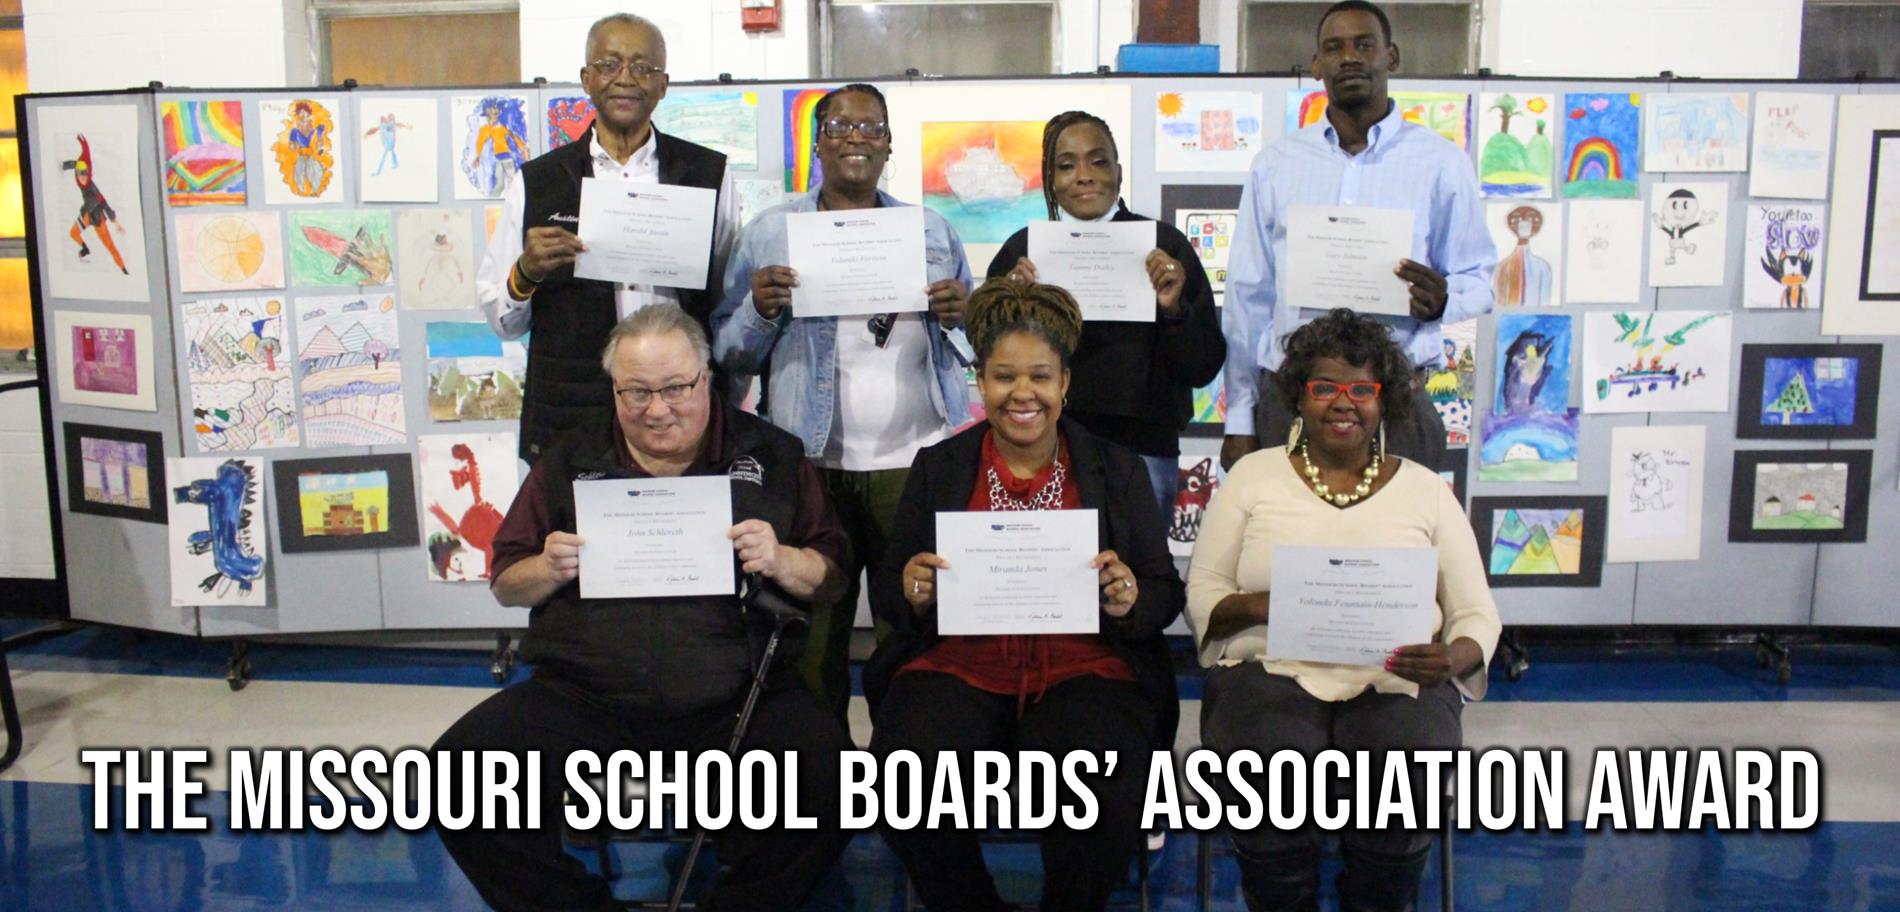 The Missouri school boards’ association award